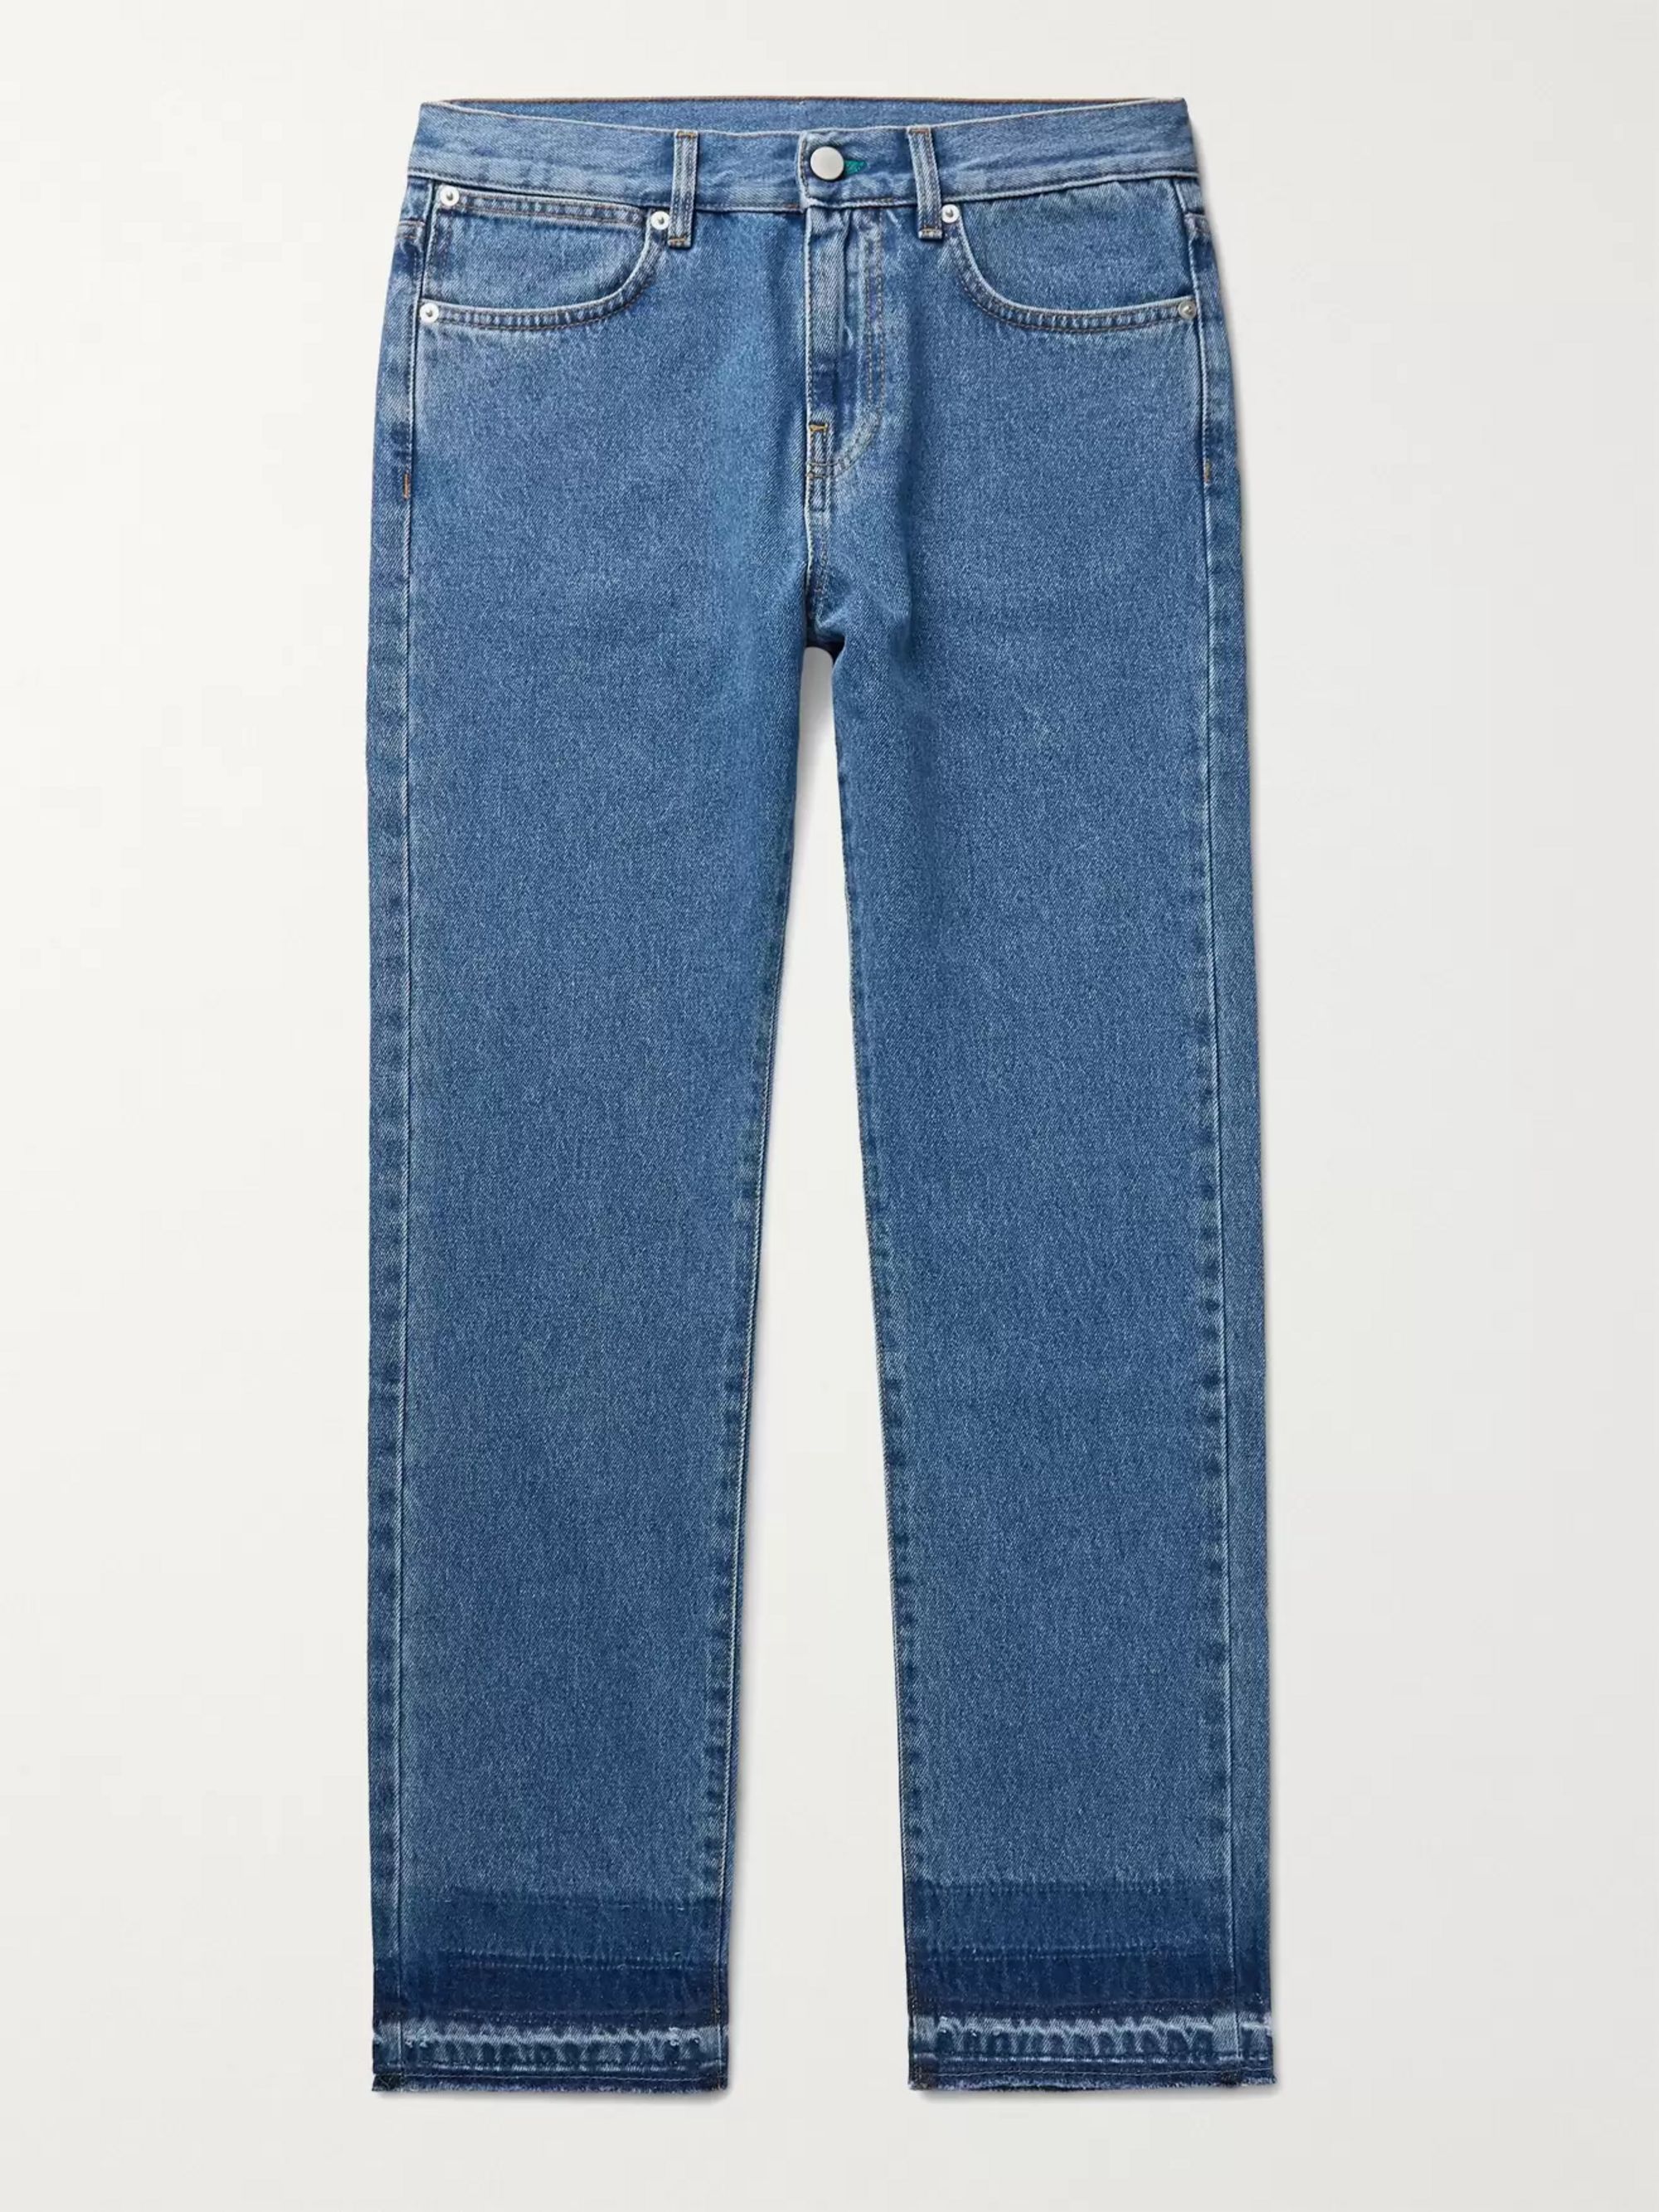 mcq jeans